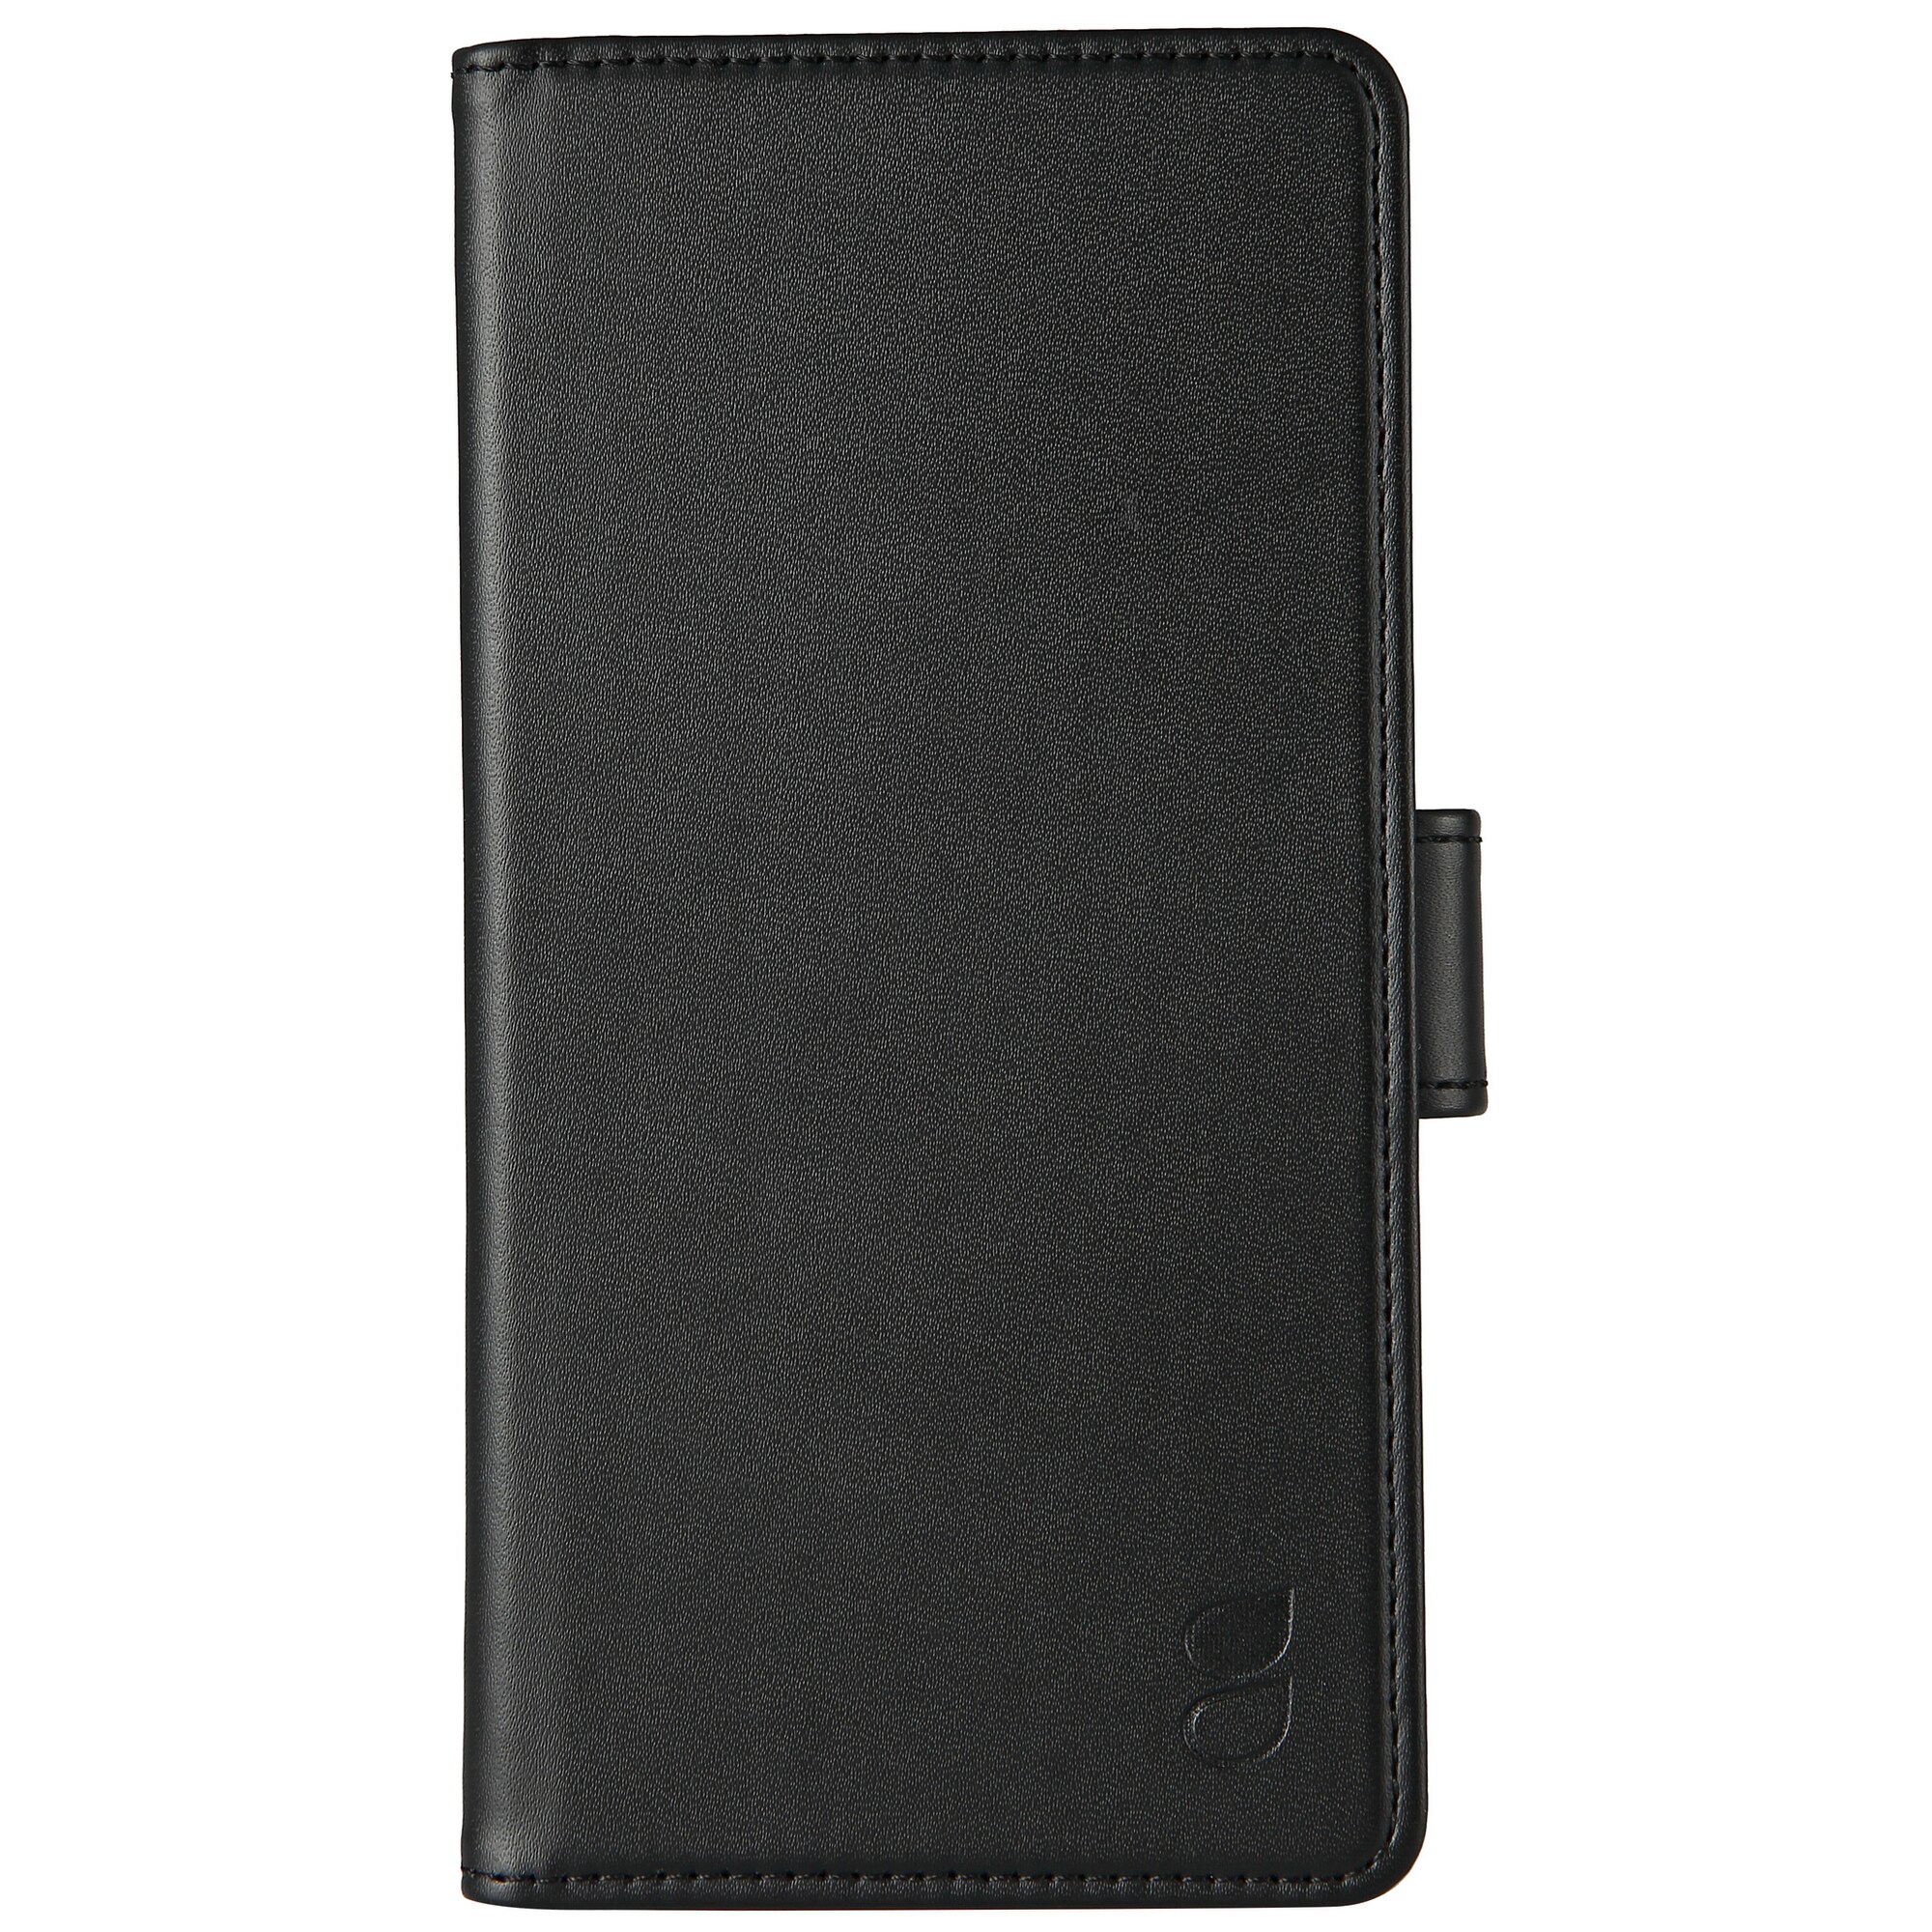 Gear Nokia 3.1 Plus plånboksfodral (svart) - Skal och Fodral - Elgiganten